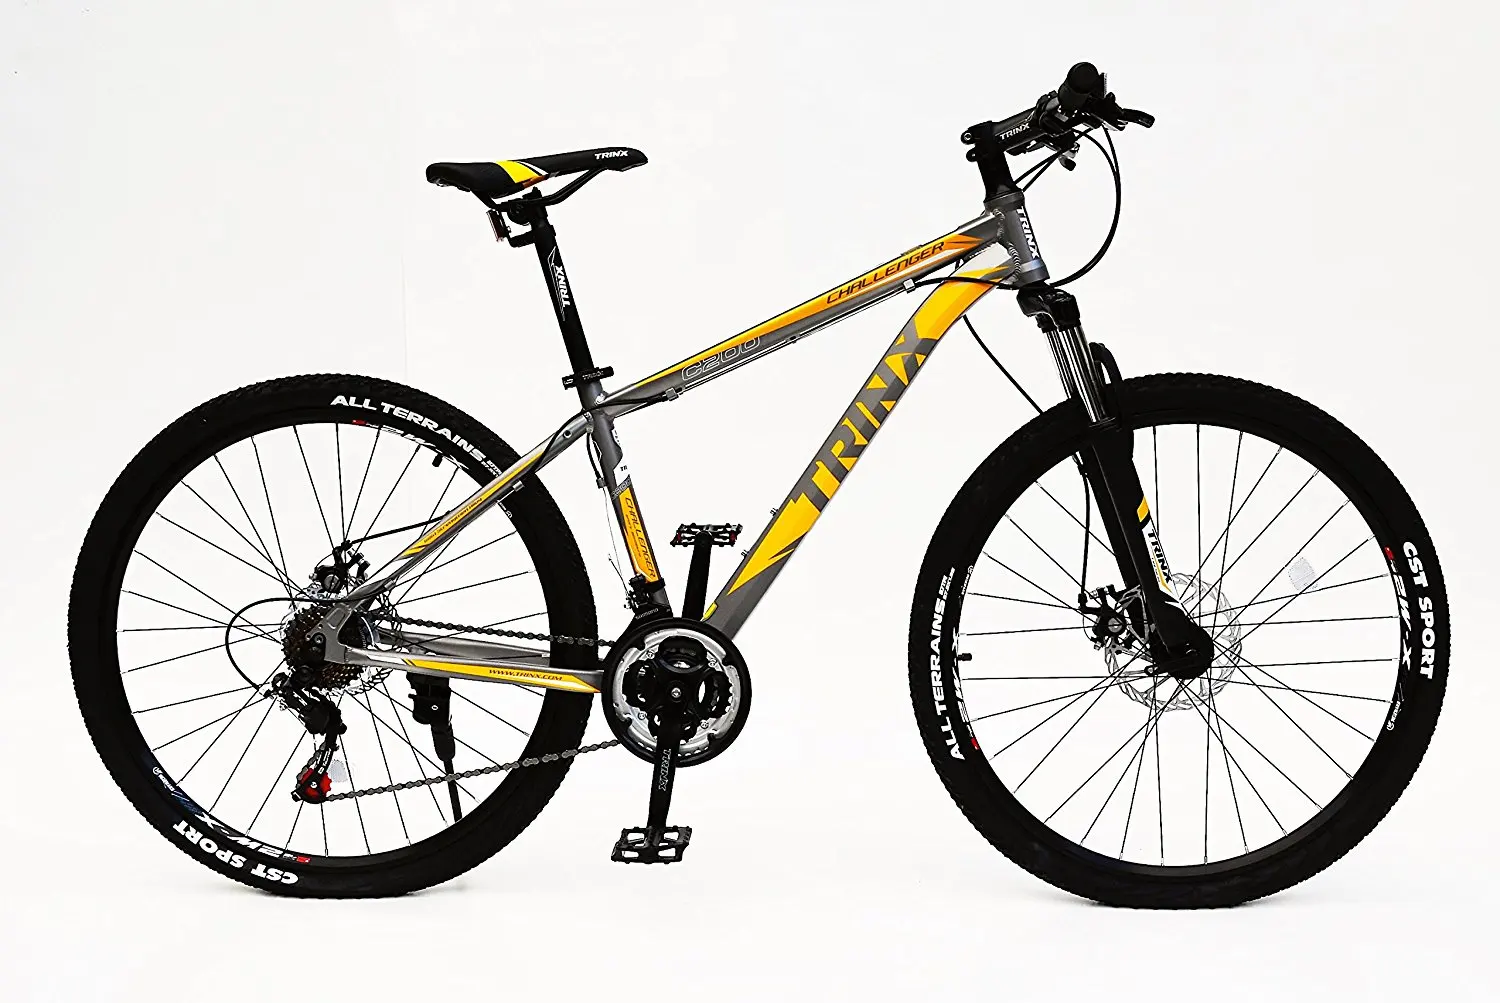 trinx mountain bike 27.5 price